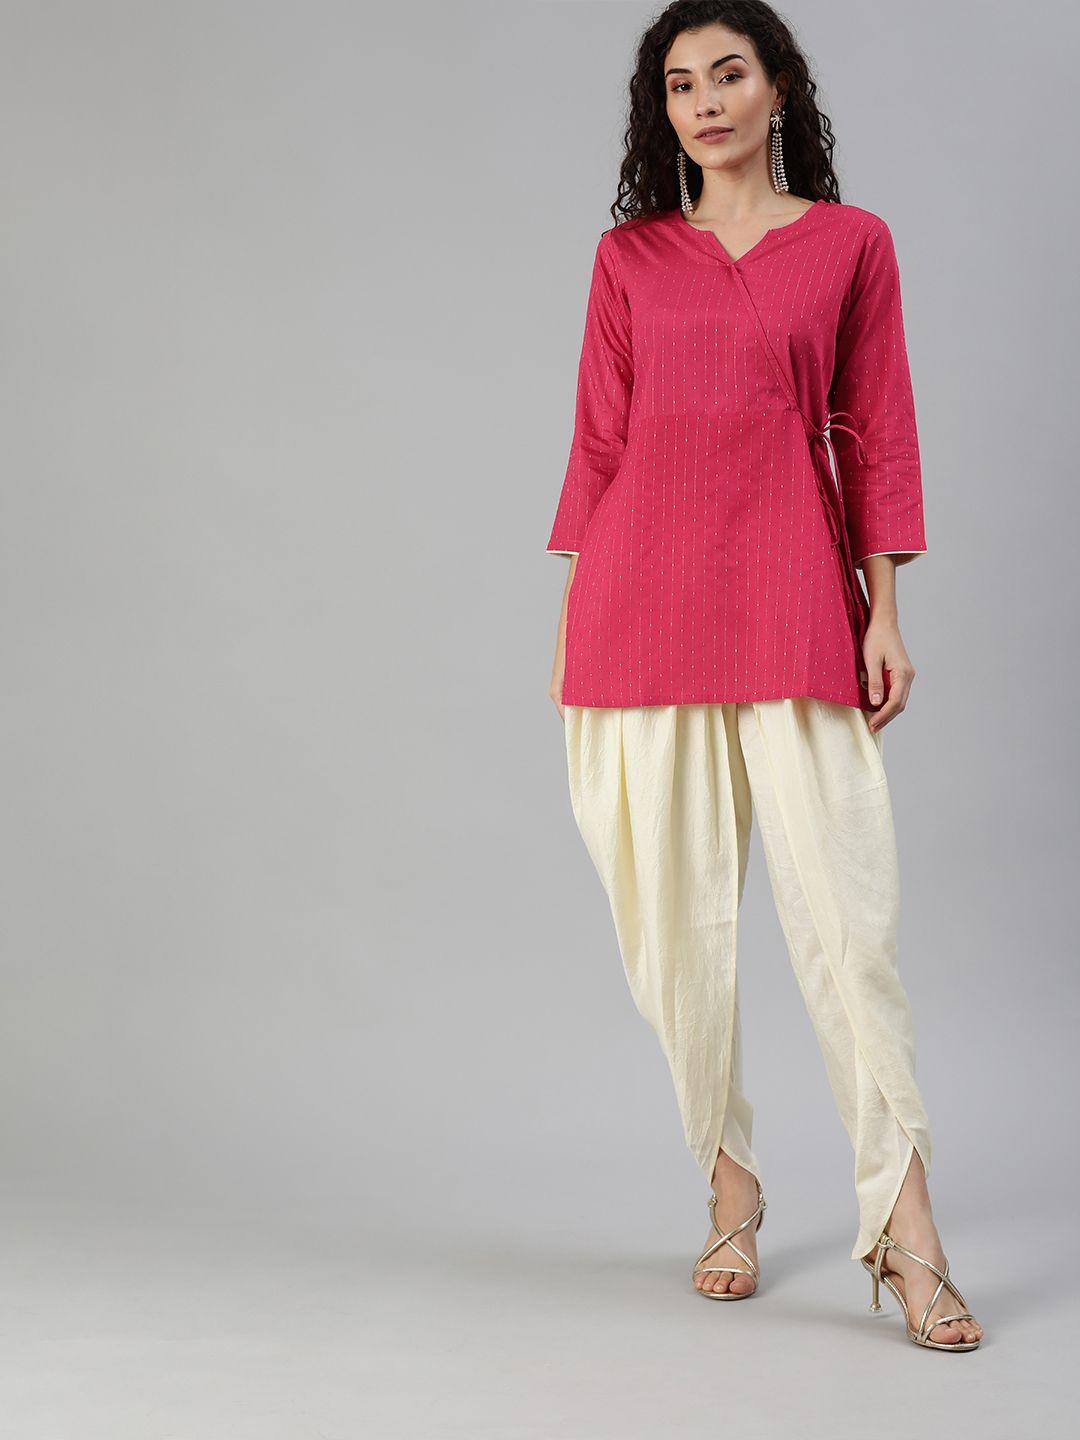 indo-era-women-pink-woven-design-top-with-dhoti-pants